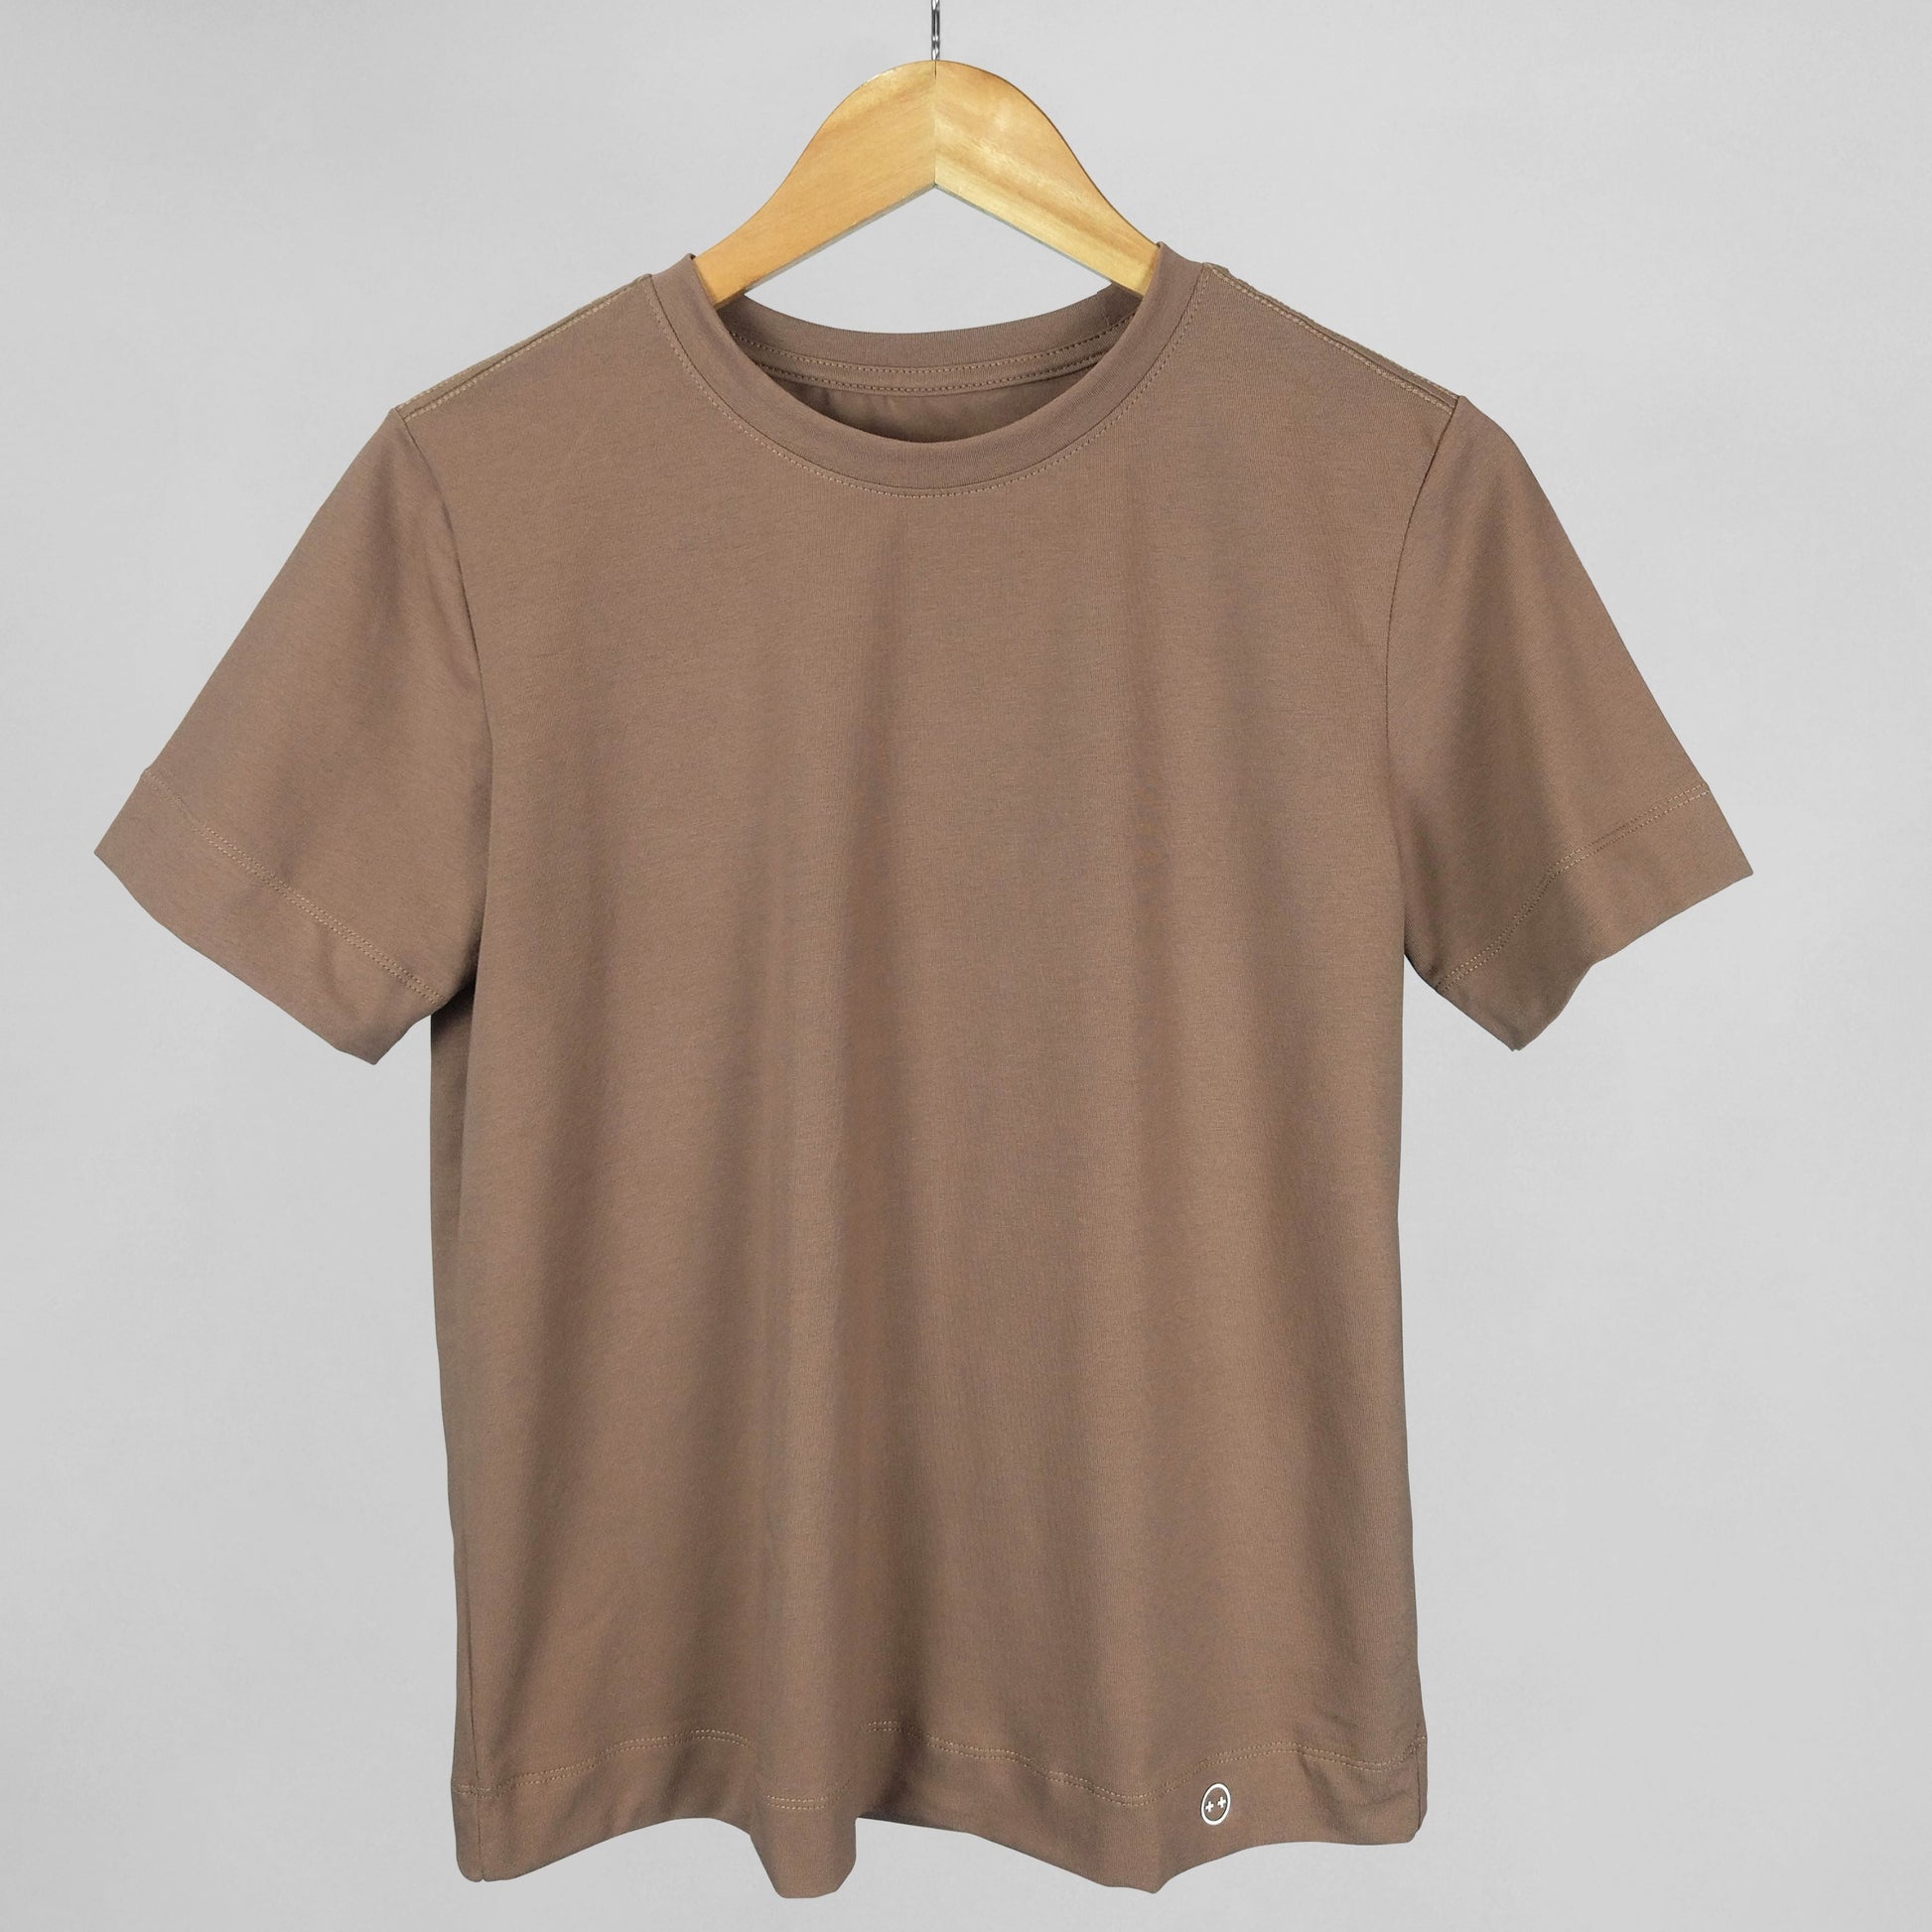 Camiseta manga corta cuello redondo color taupé (café)